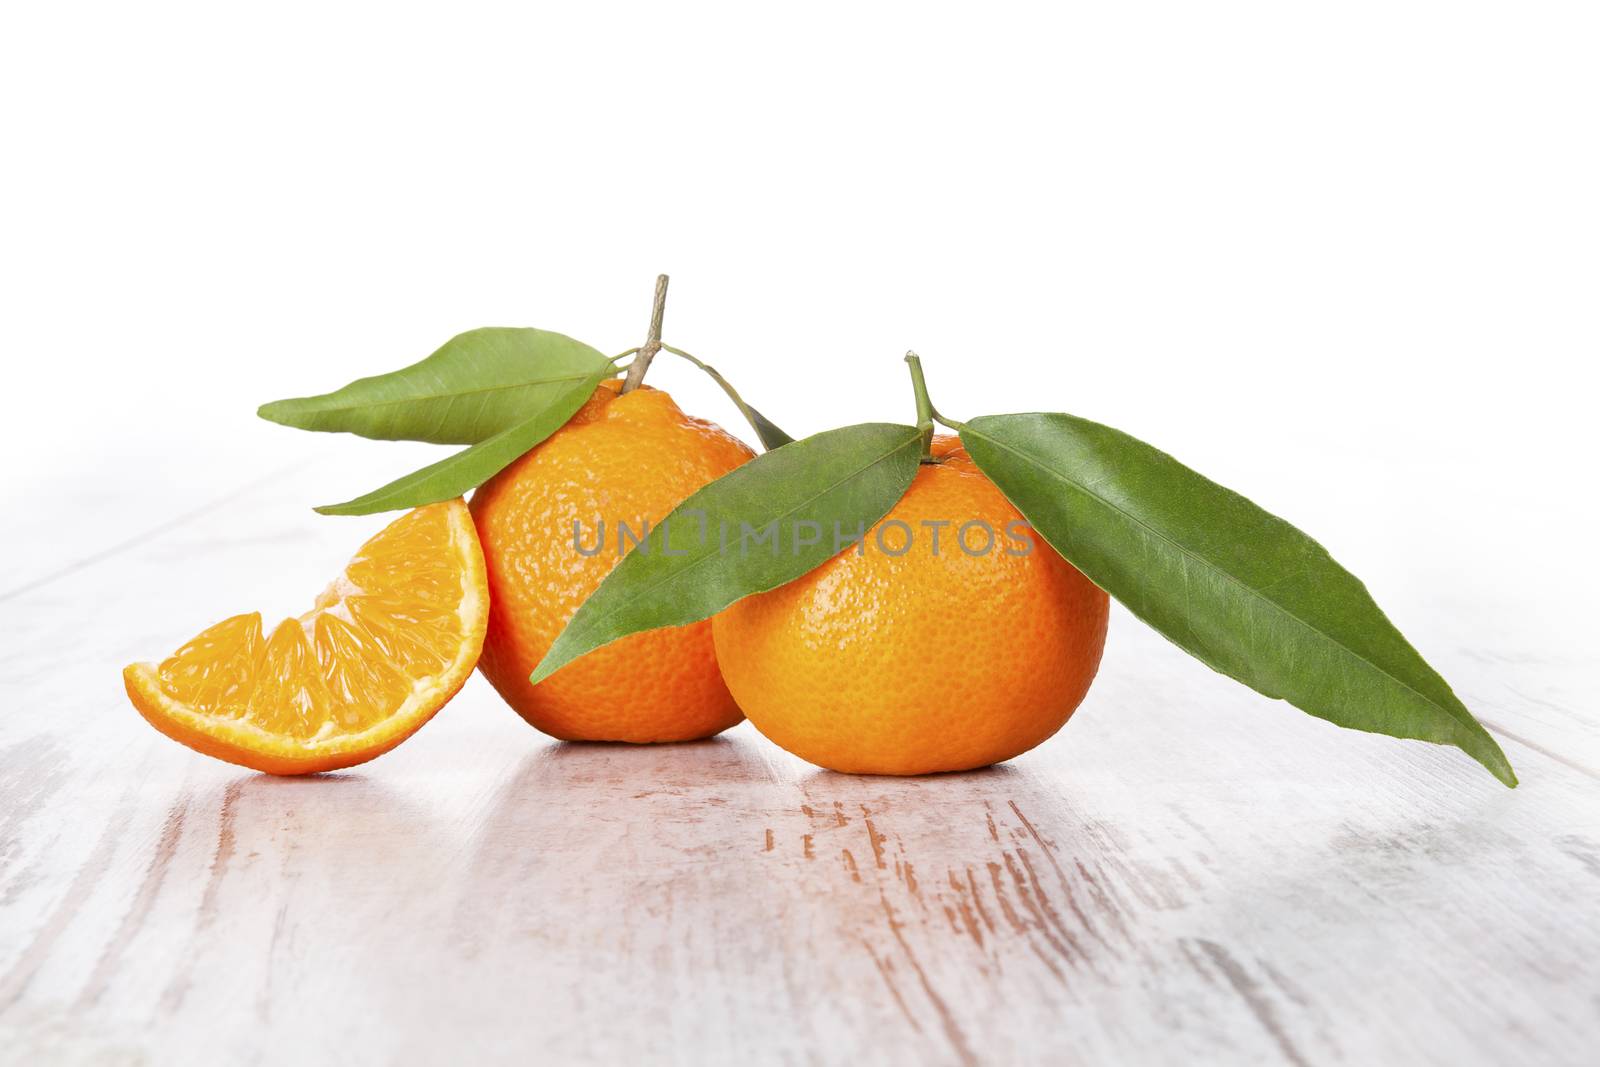 Mandarine fruit on white wooden table. Provence style.